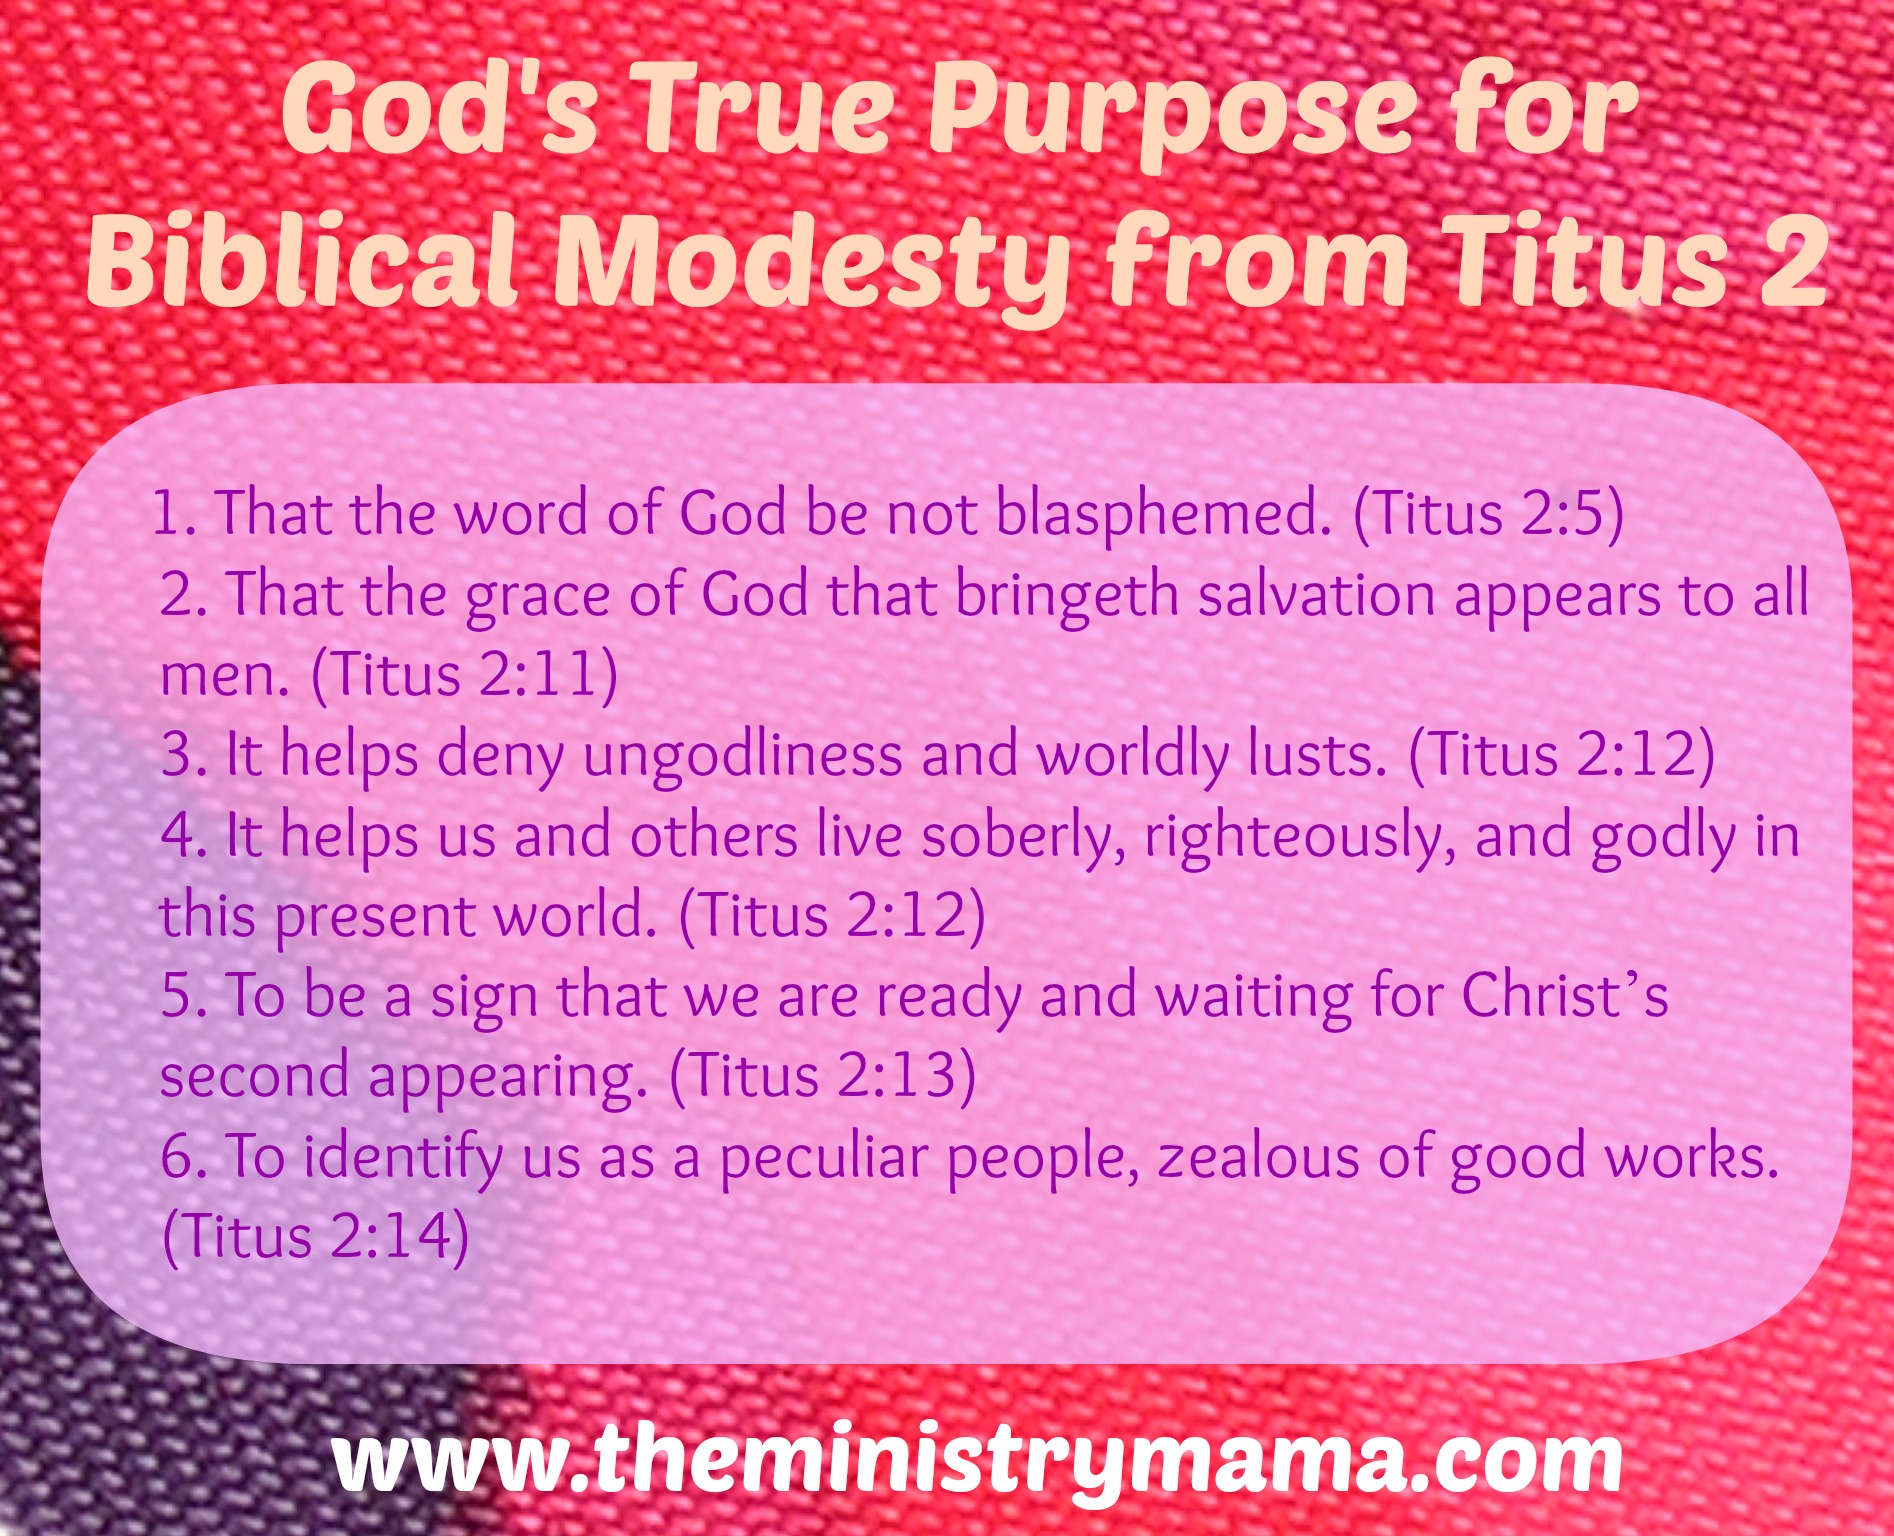 Biblical modesty